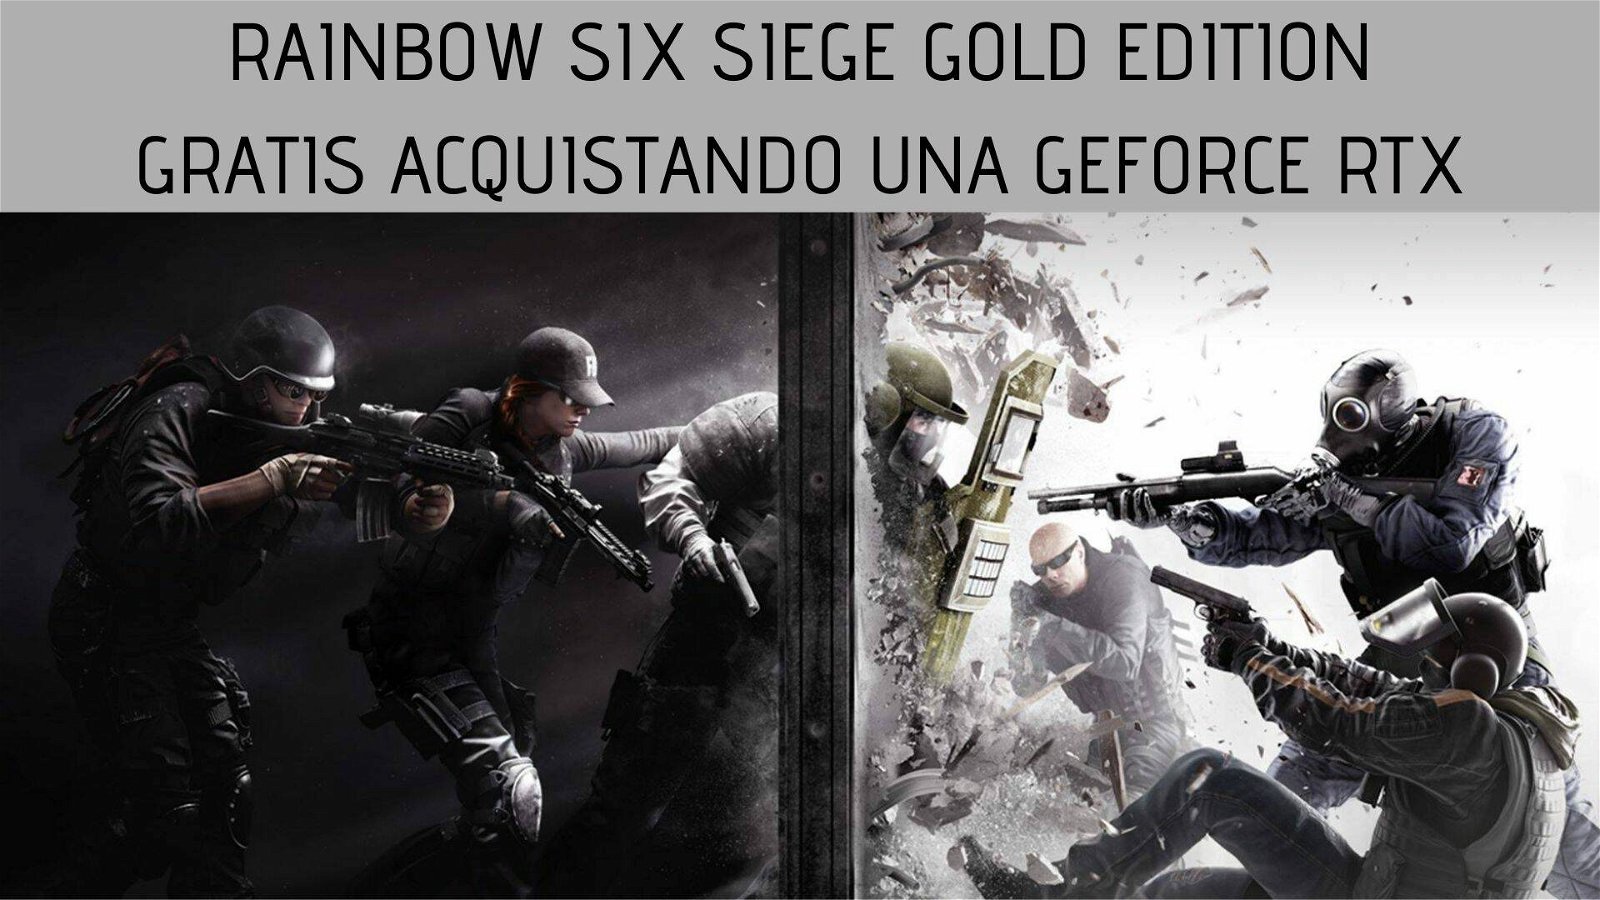 Immagine di Rainbow Six Siege Gold Edition gratis acquistando una Nvidia GeForce RTX!